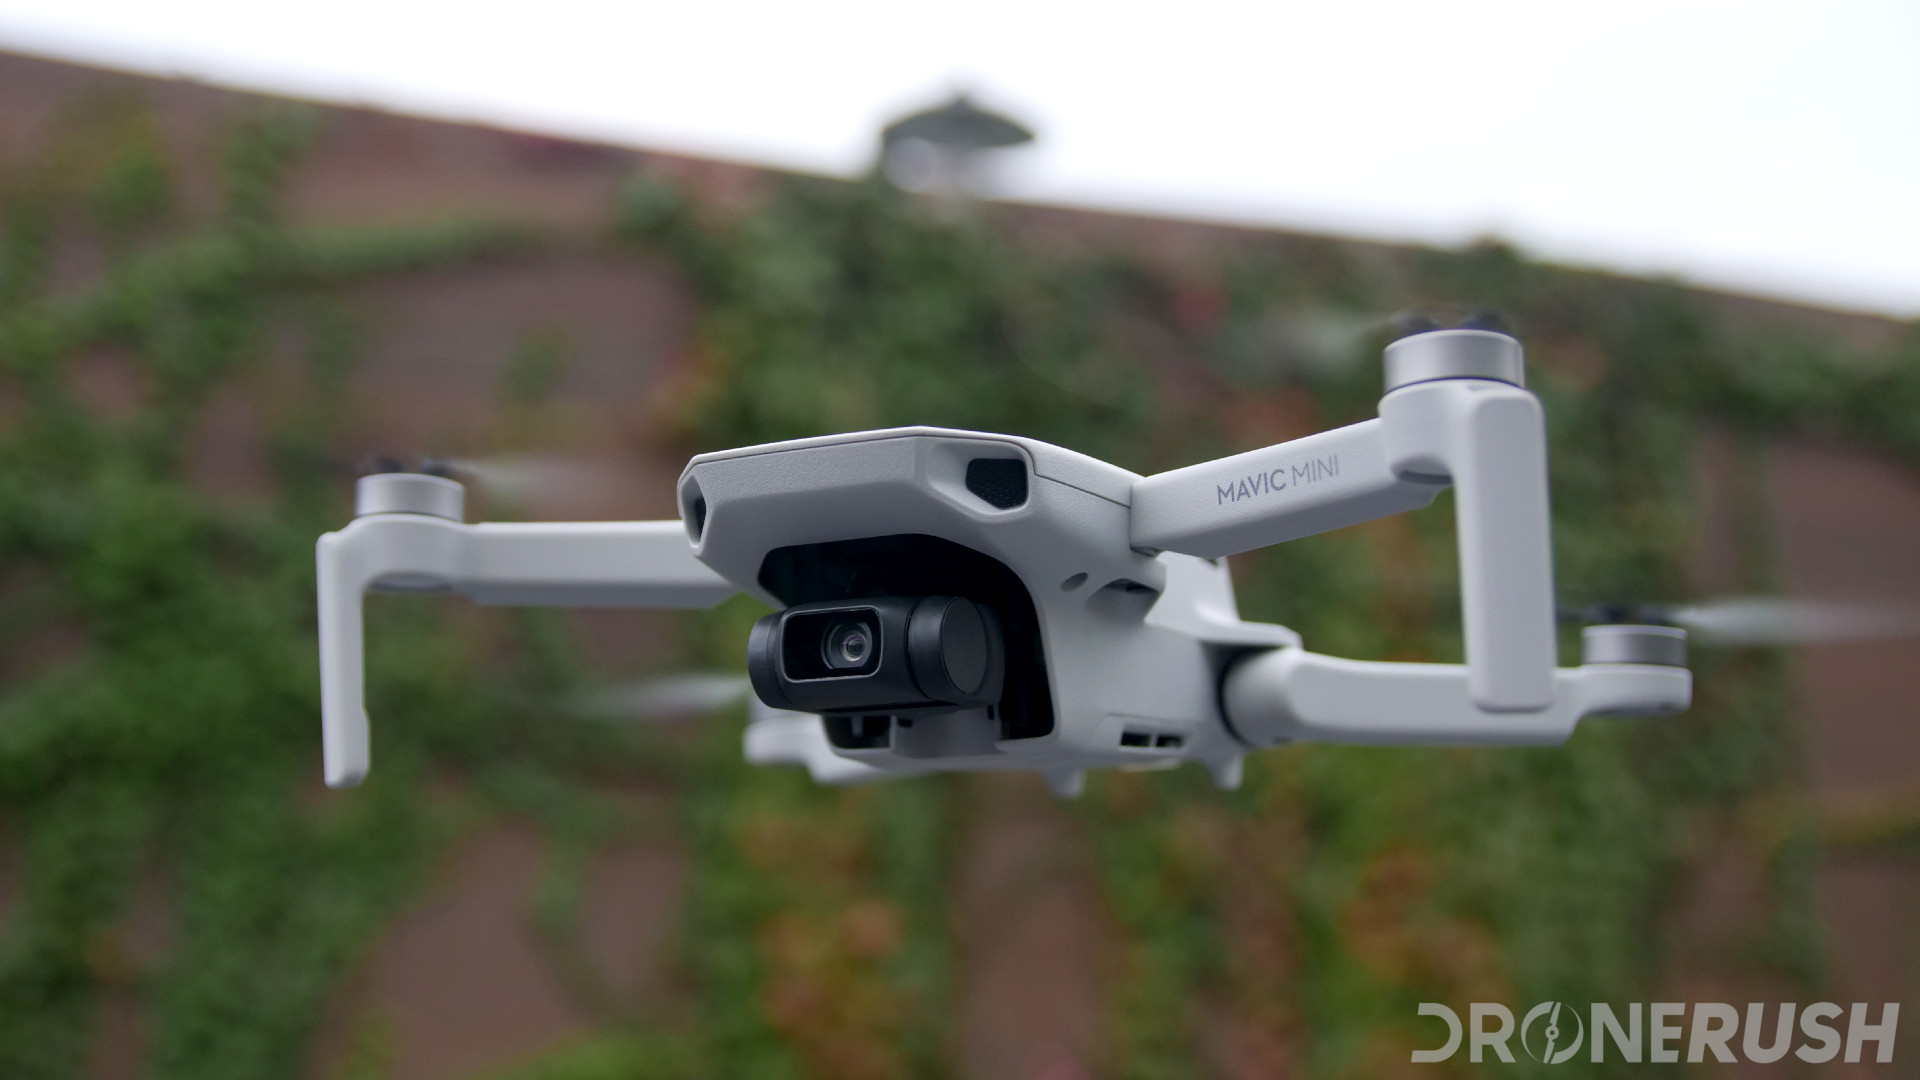 DJI Mavic Mini - Drone Rush